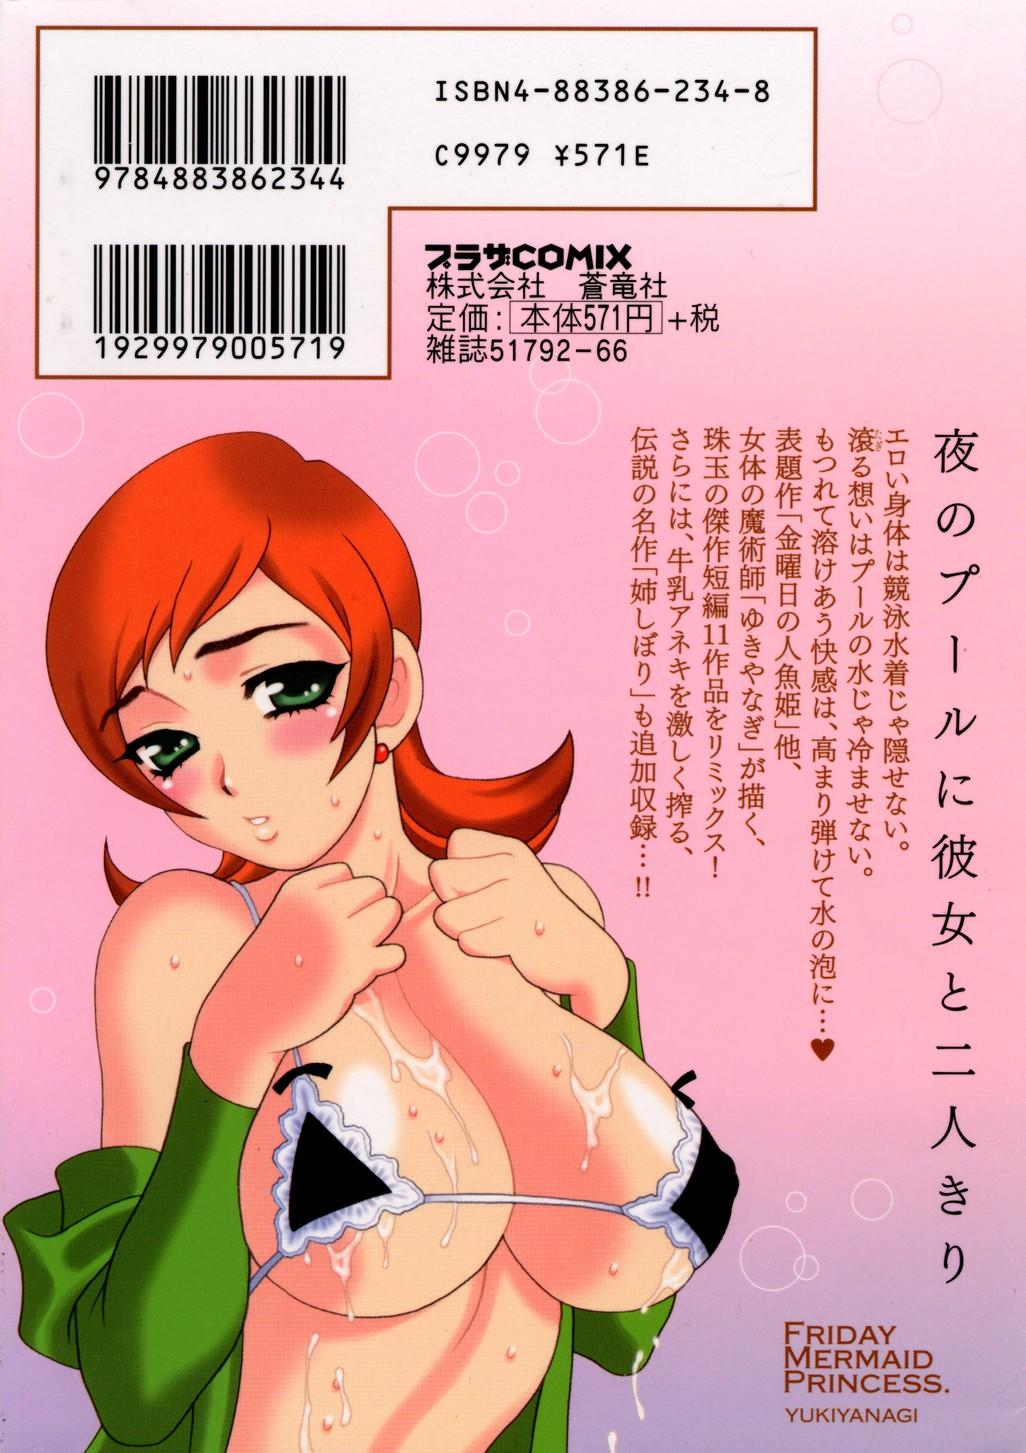 Speculum Kinyoubi no Ningyohime - Friday Mermaid Princess Mature - Page 2